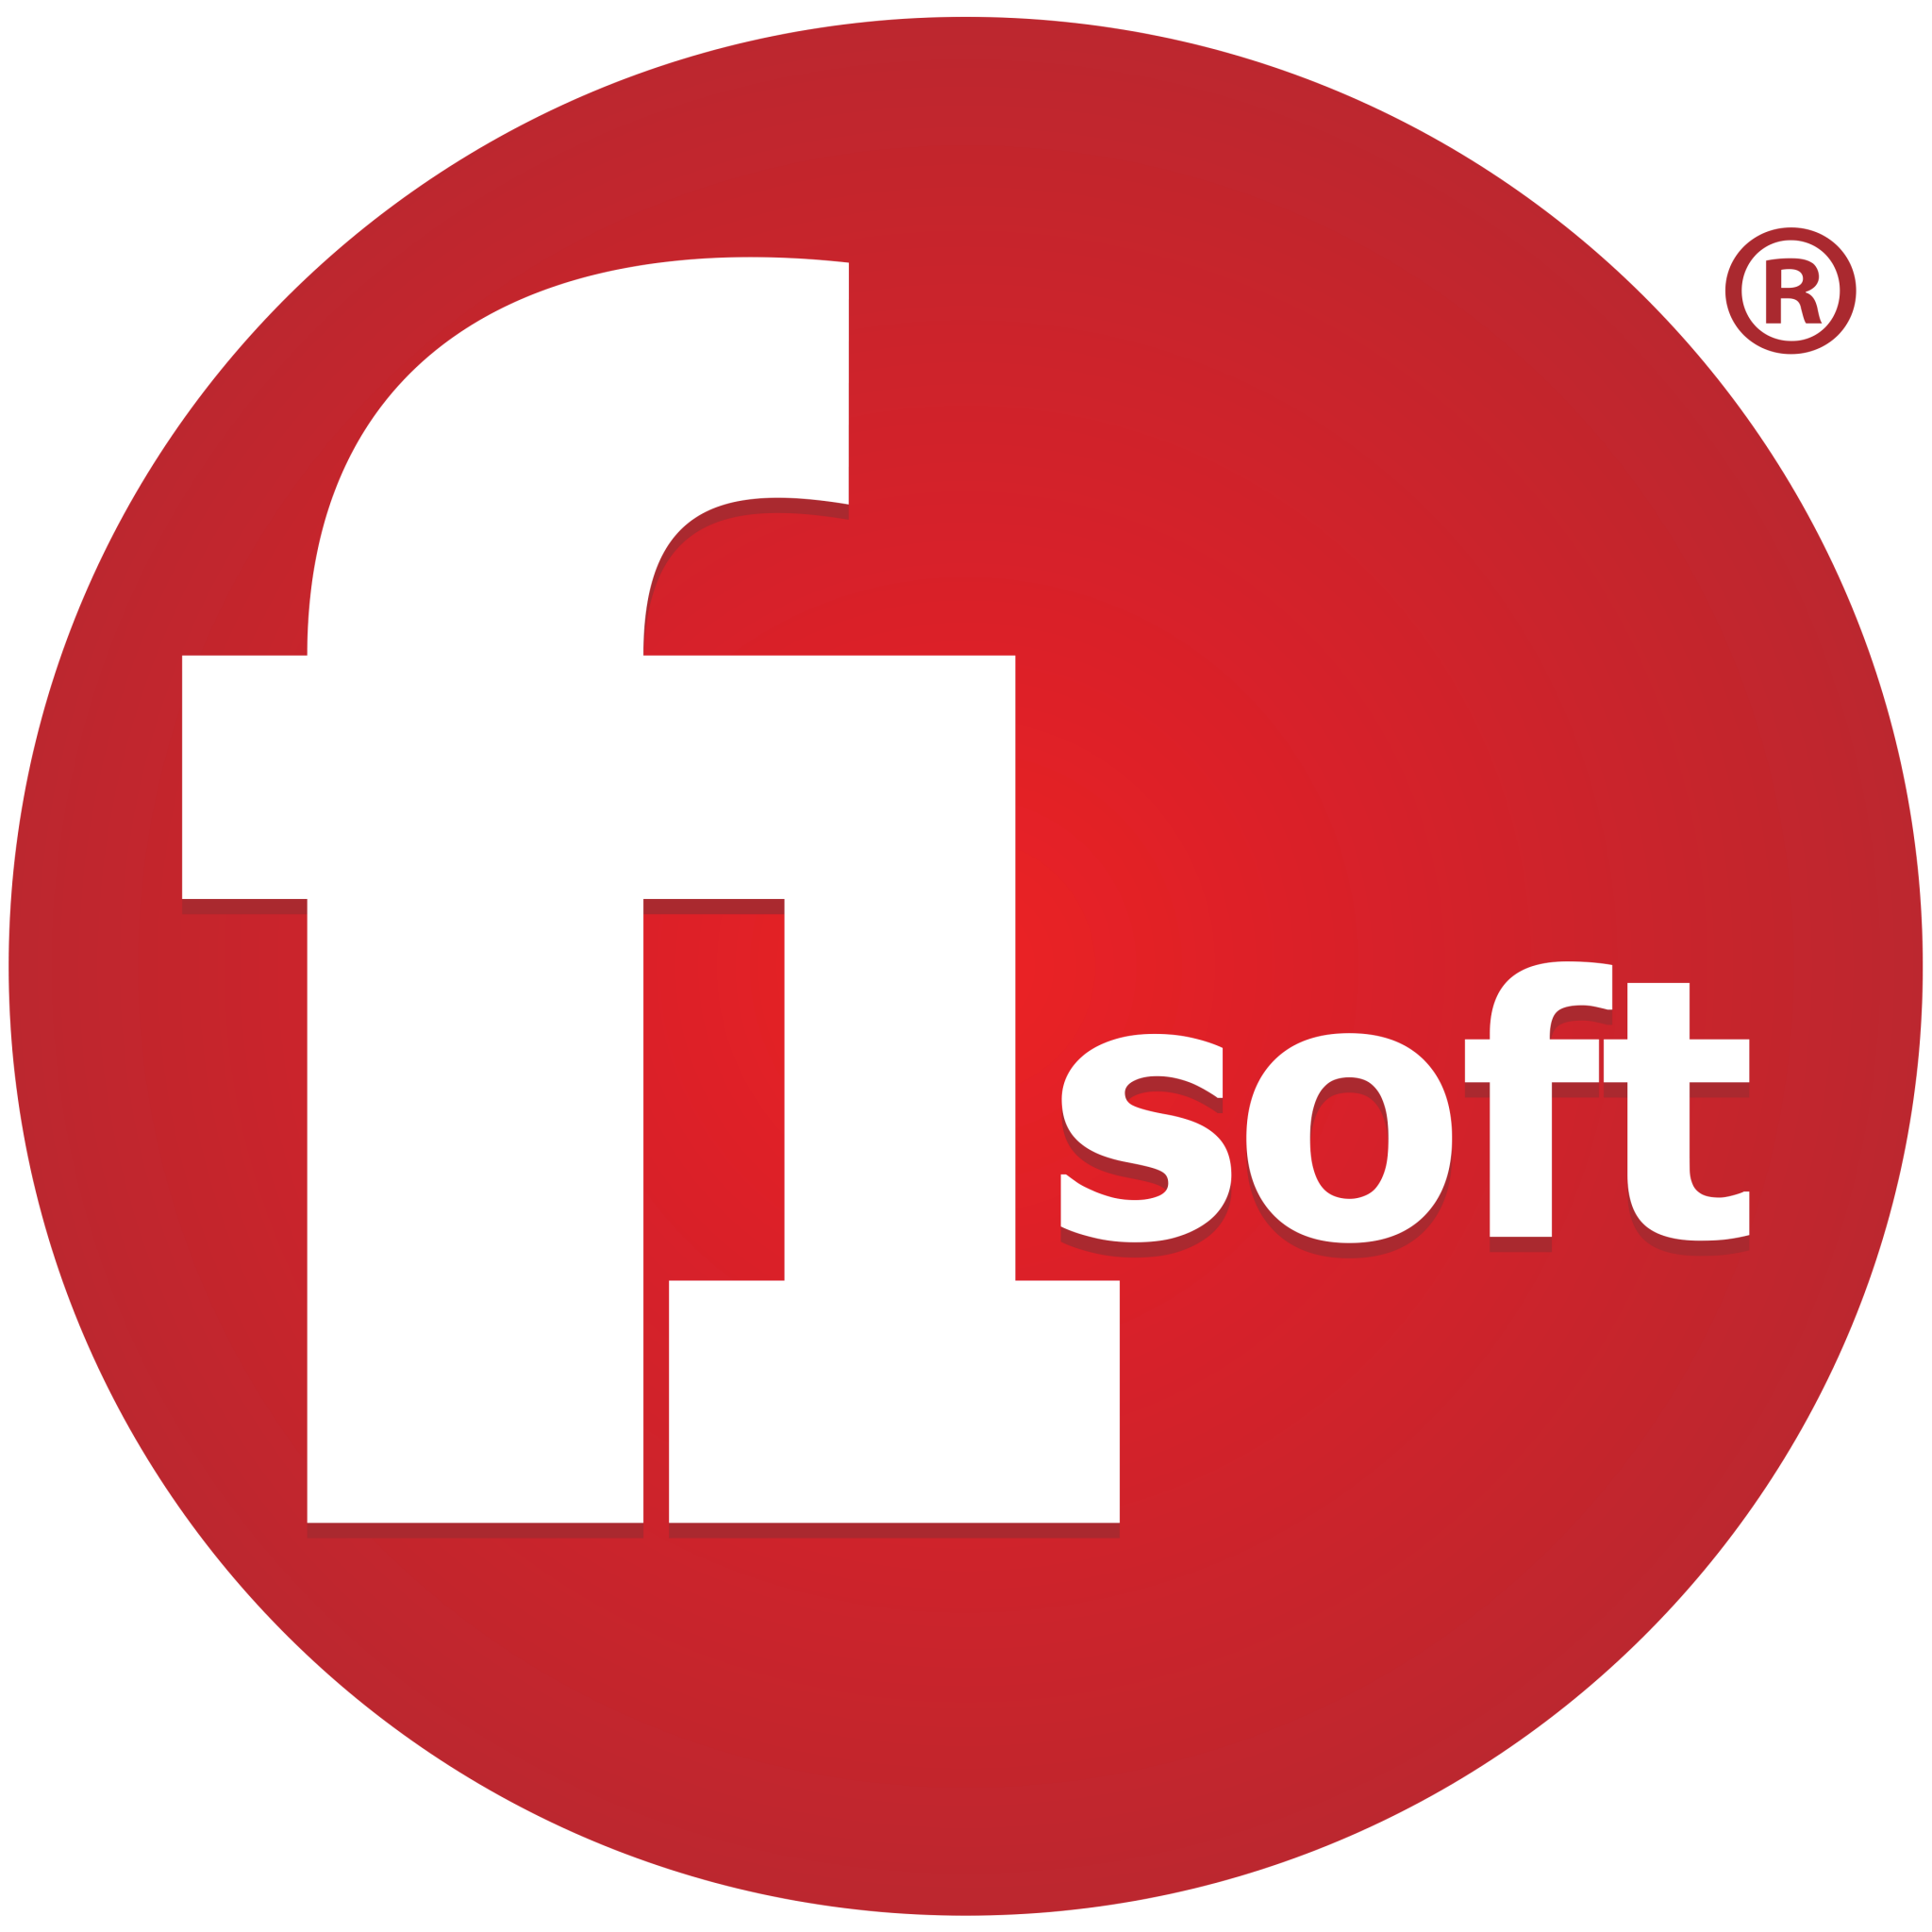 f1soft logo